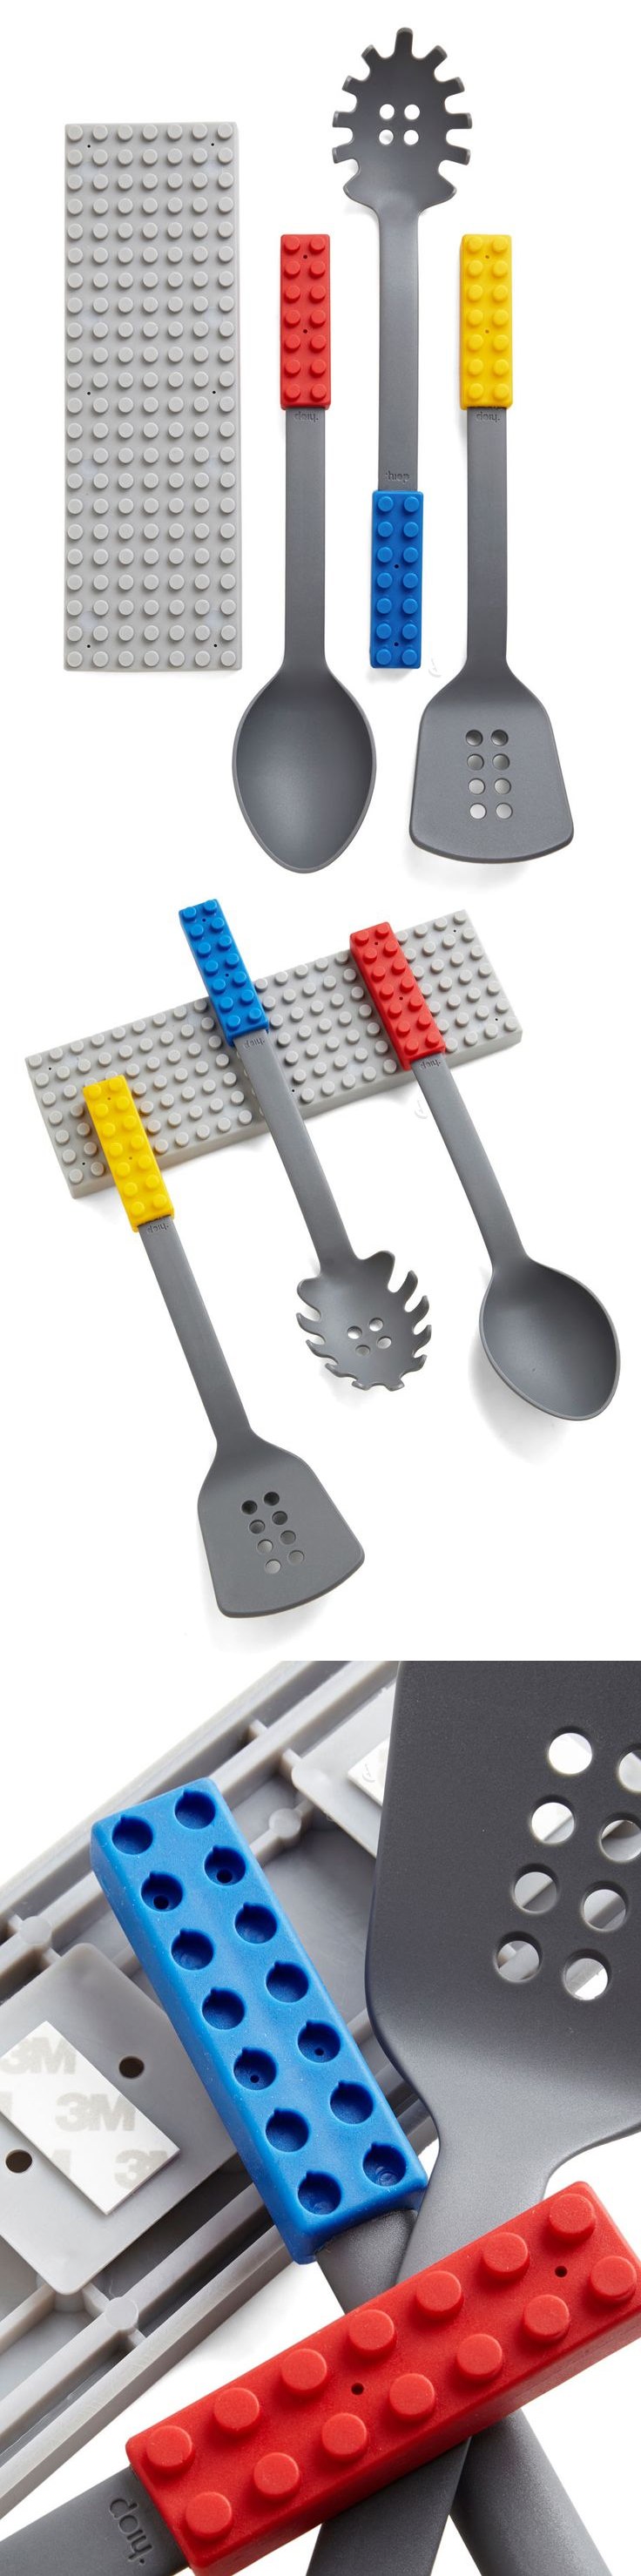 Lego kitchen utensils! #product_design